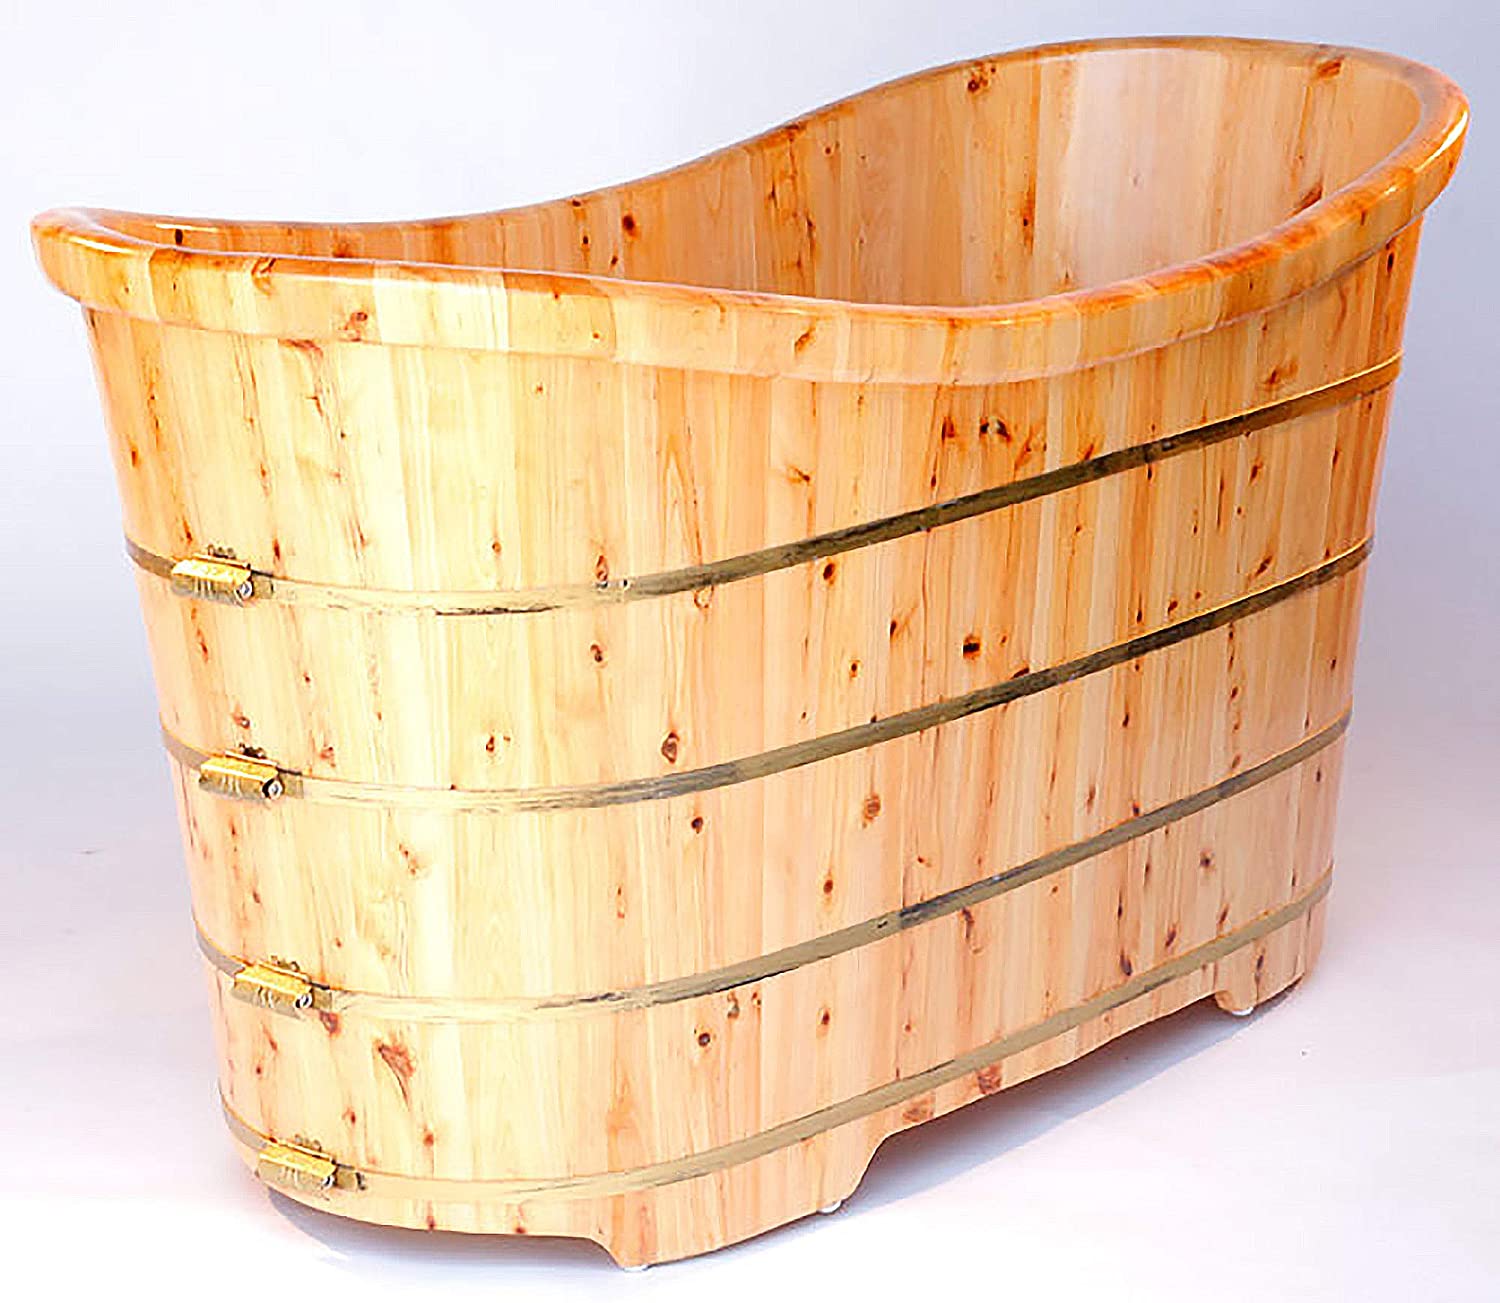 Bồn tắm gỗ oval